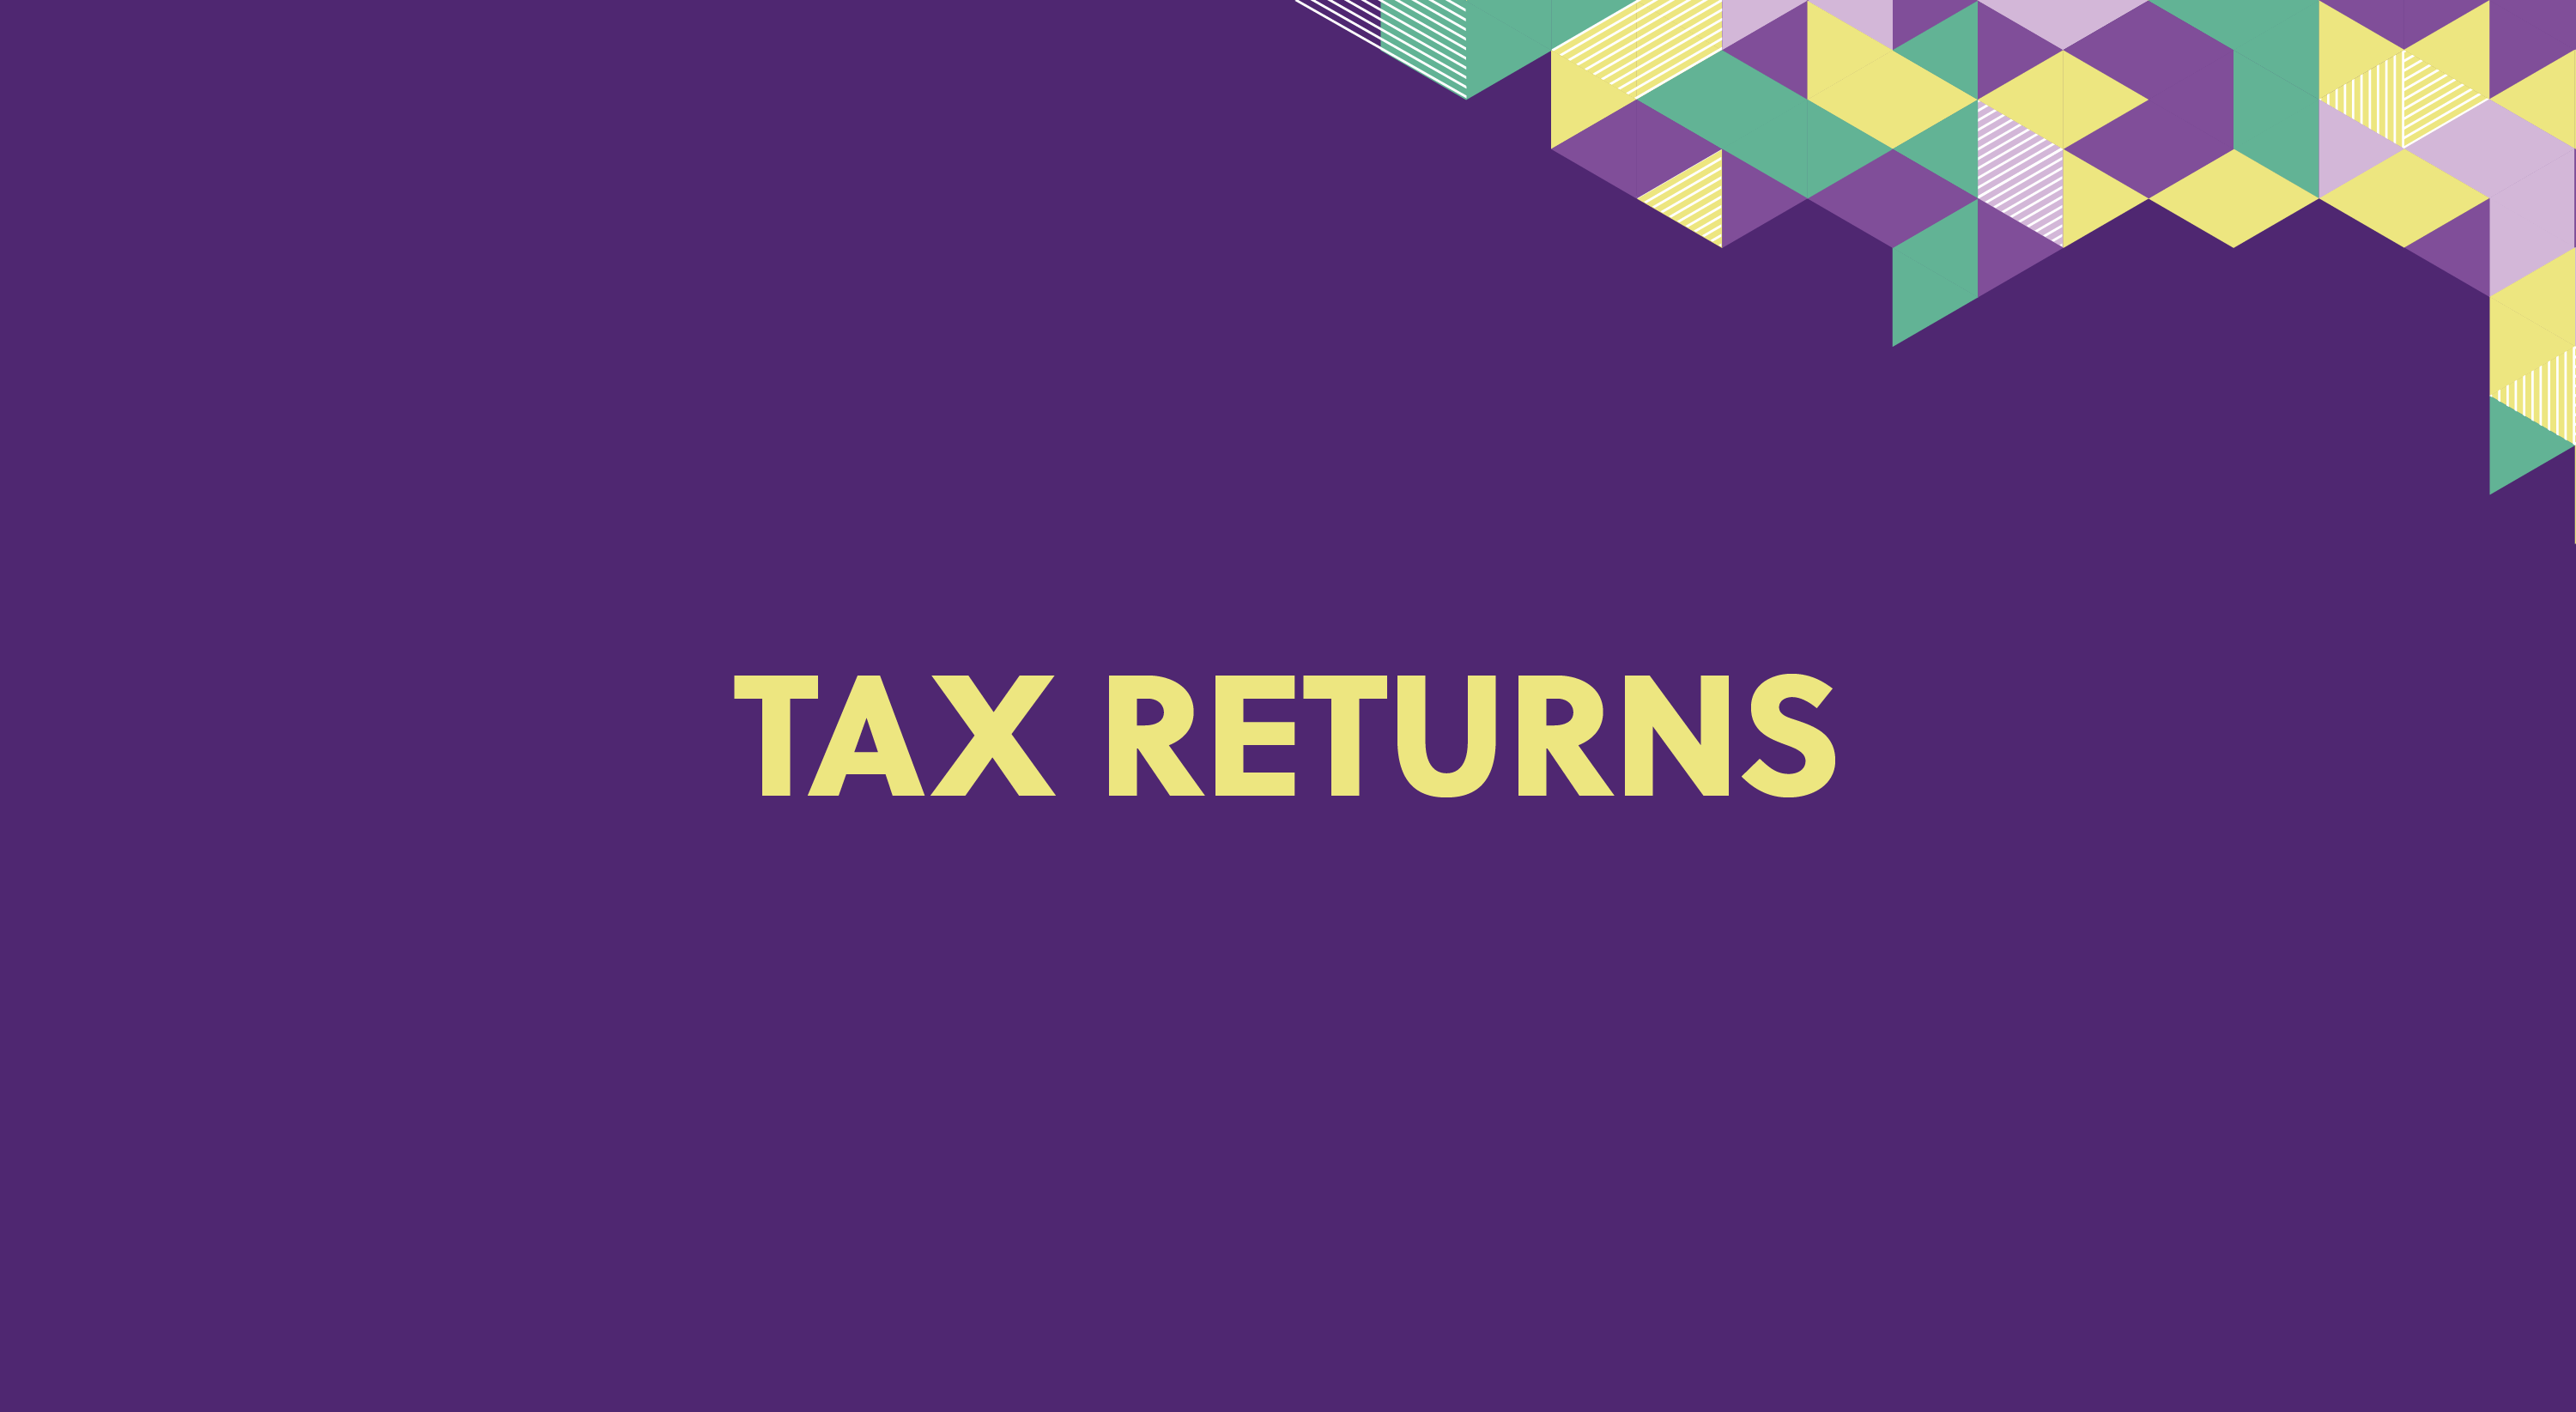 Tax returns on a purple background